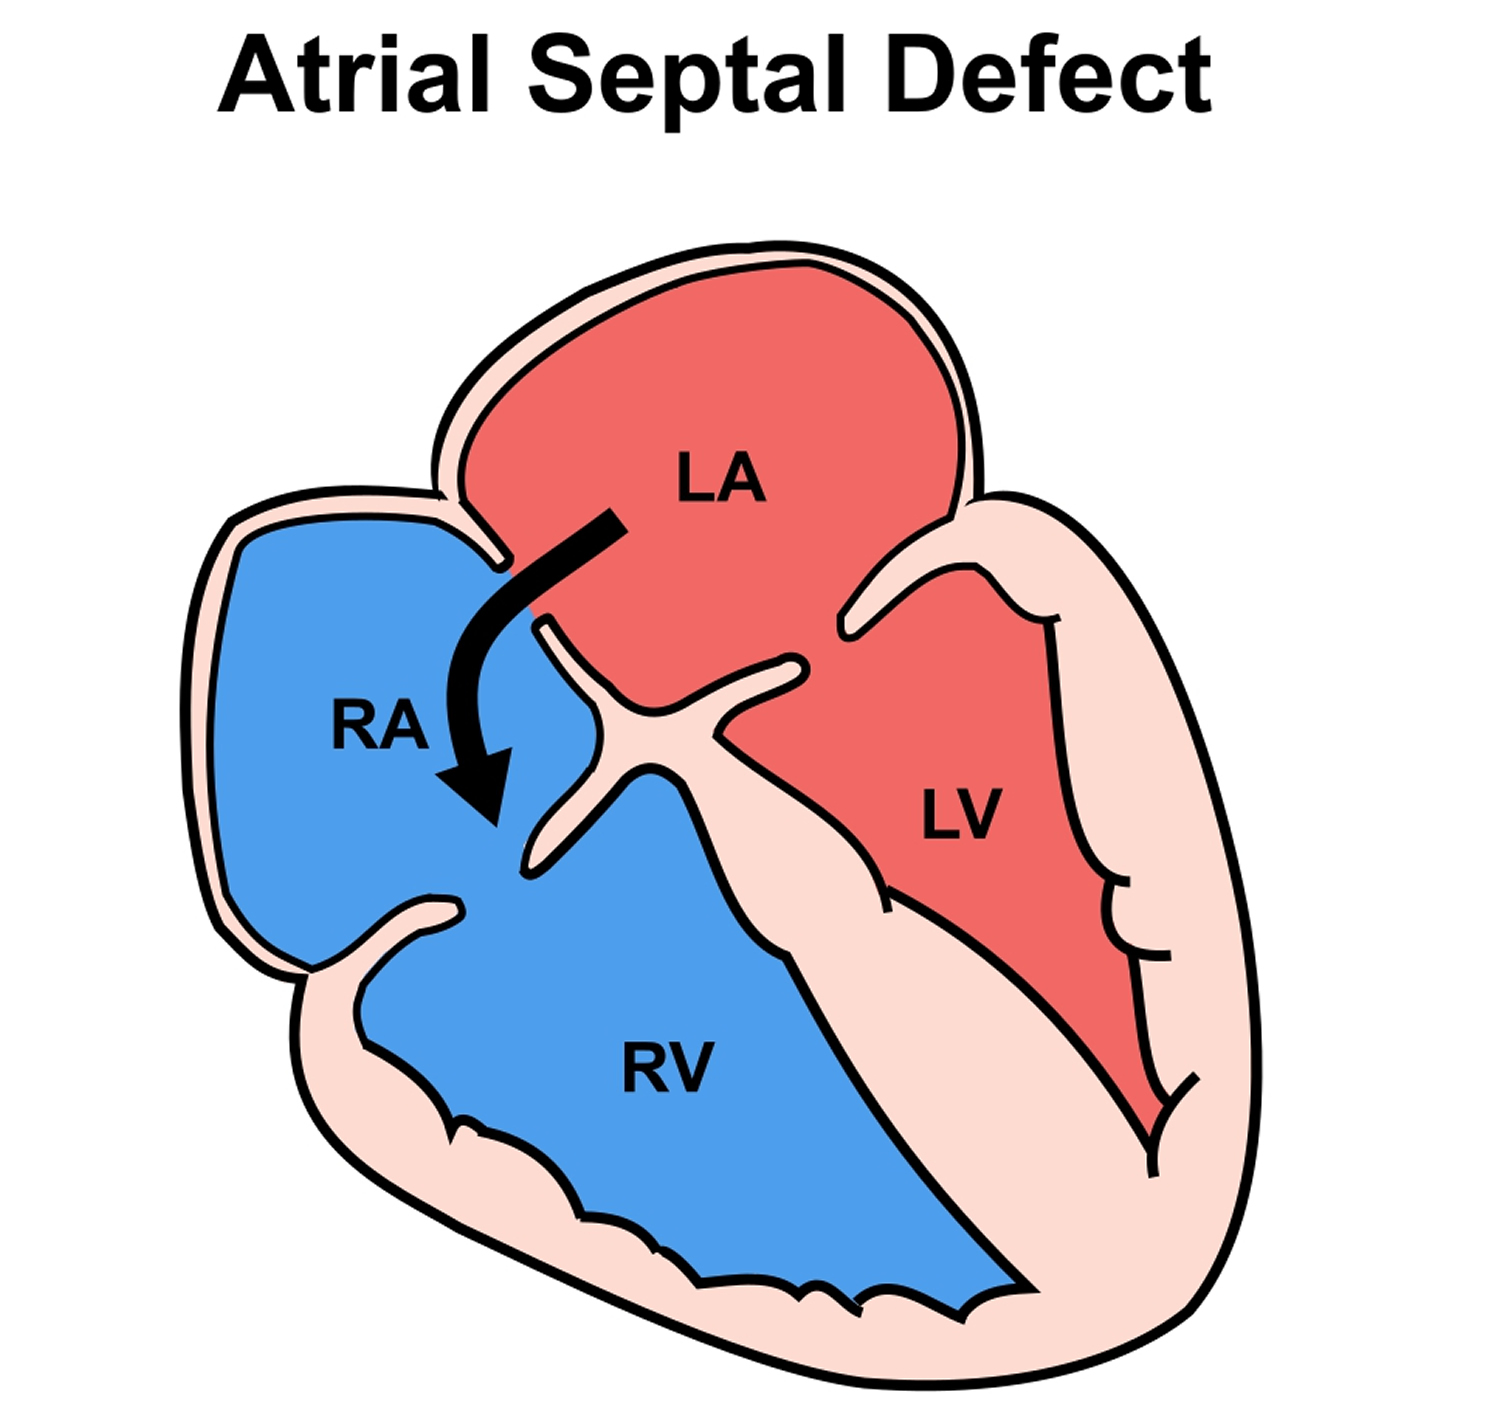 Atrial Septal Defect - Causes, Symptoms, Types, Diagnosis, Treatment